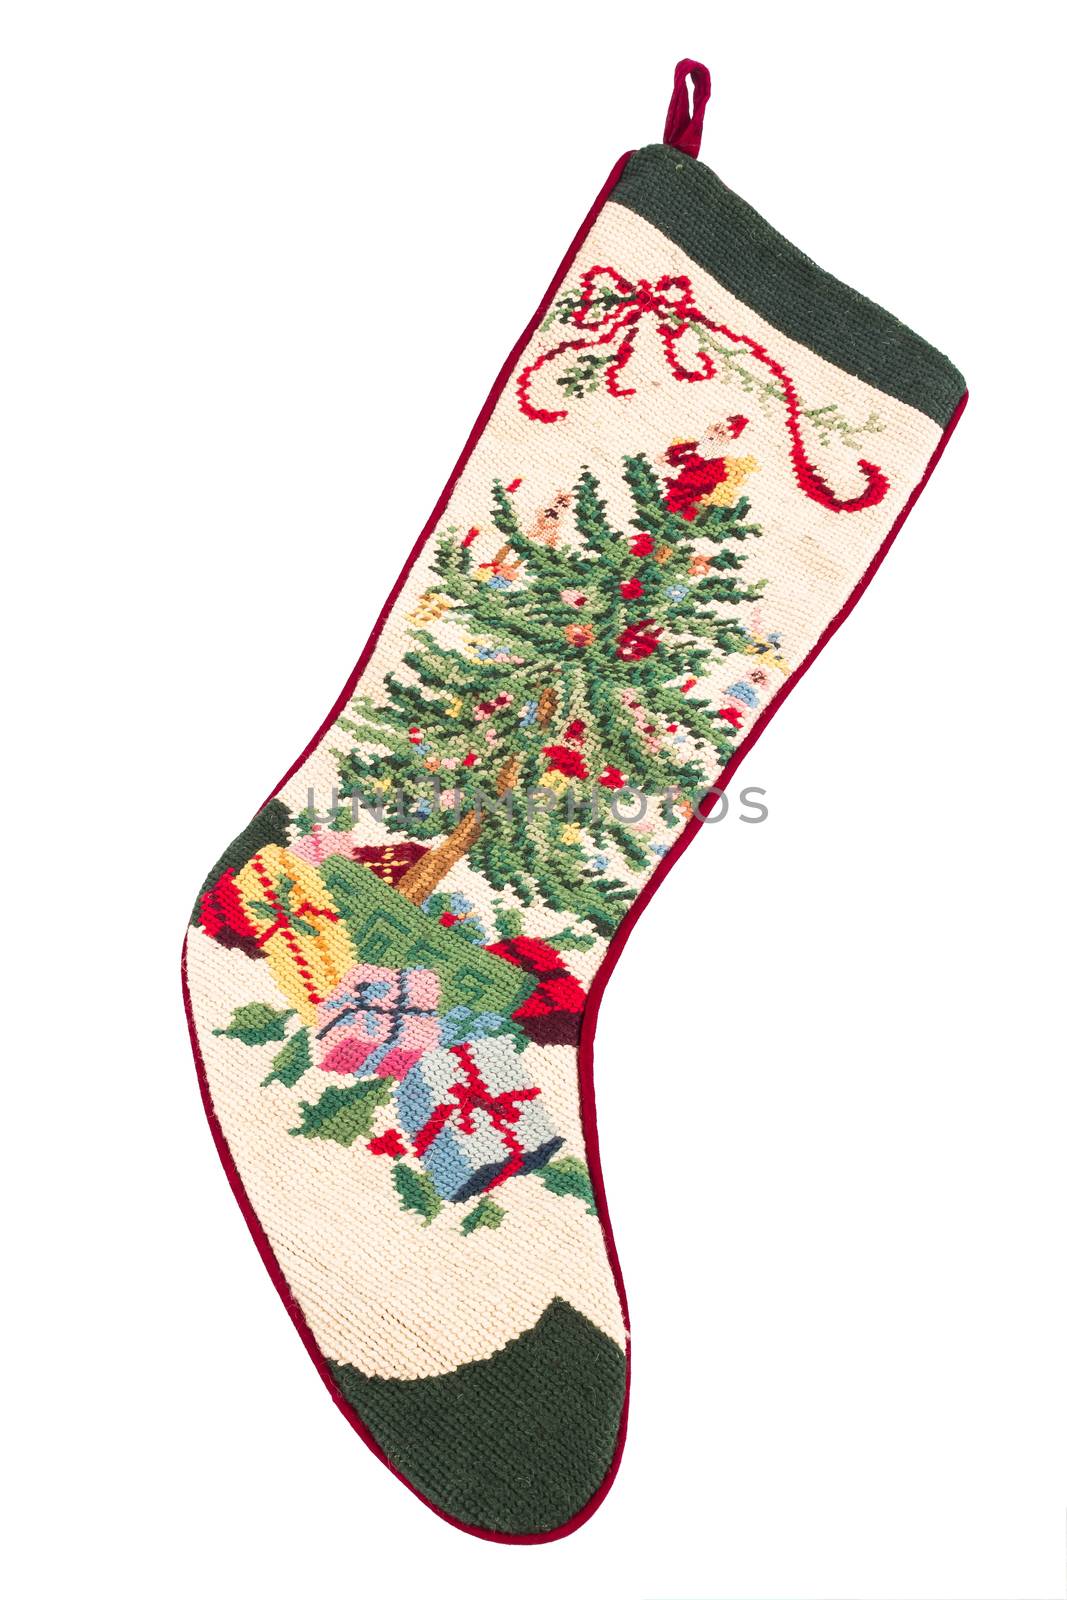 Christmas cross stitch stocking by simpleBE